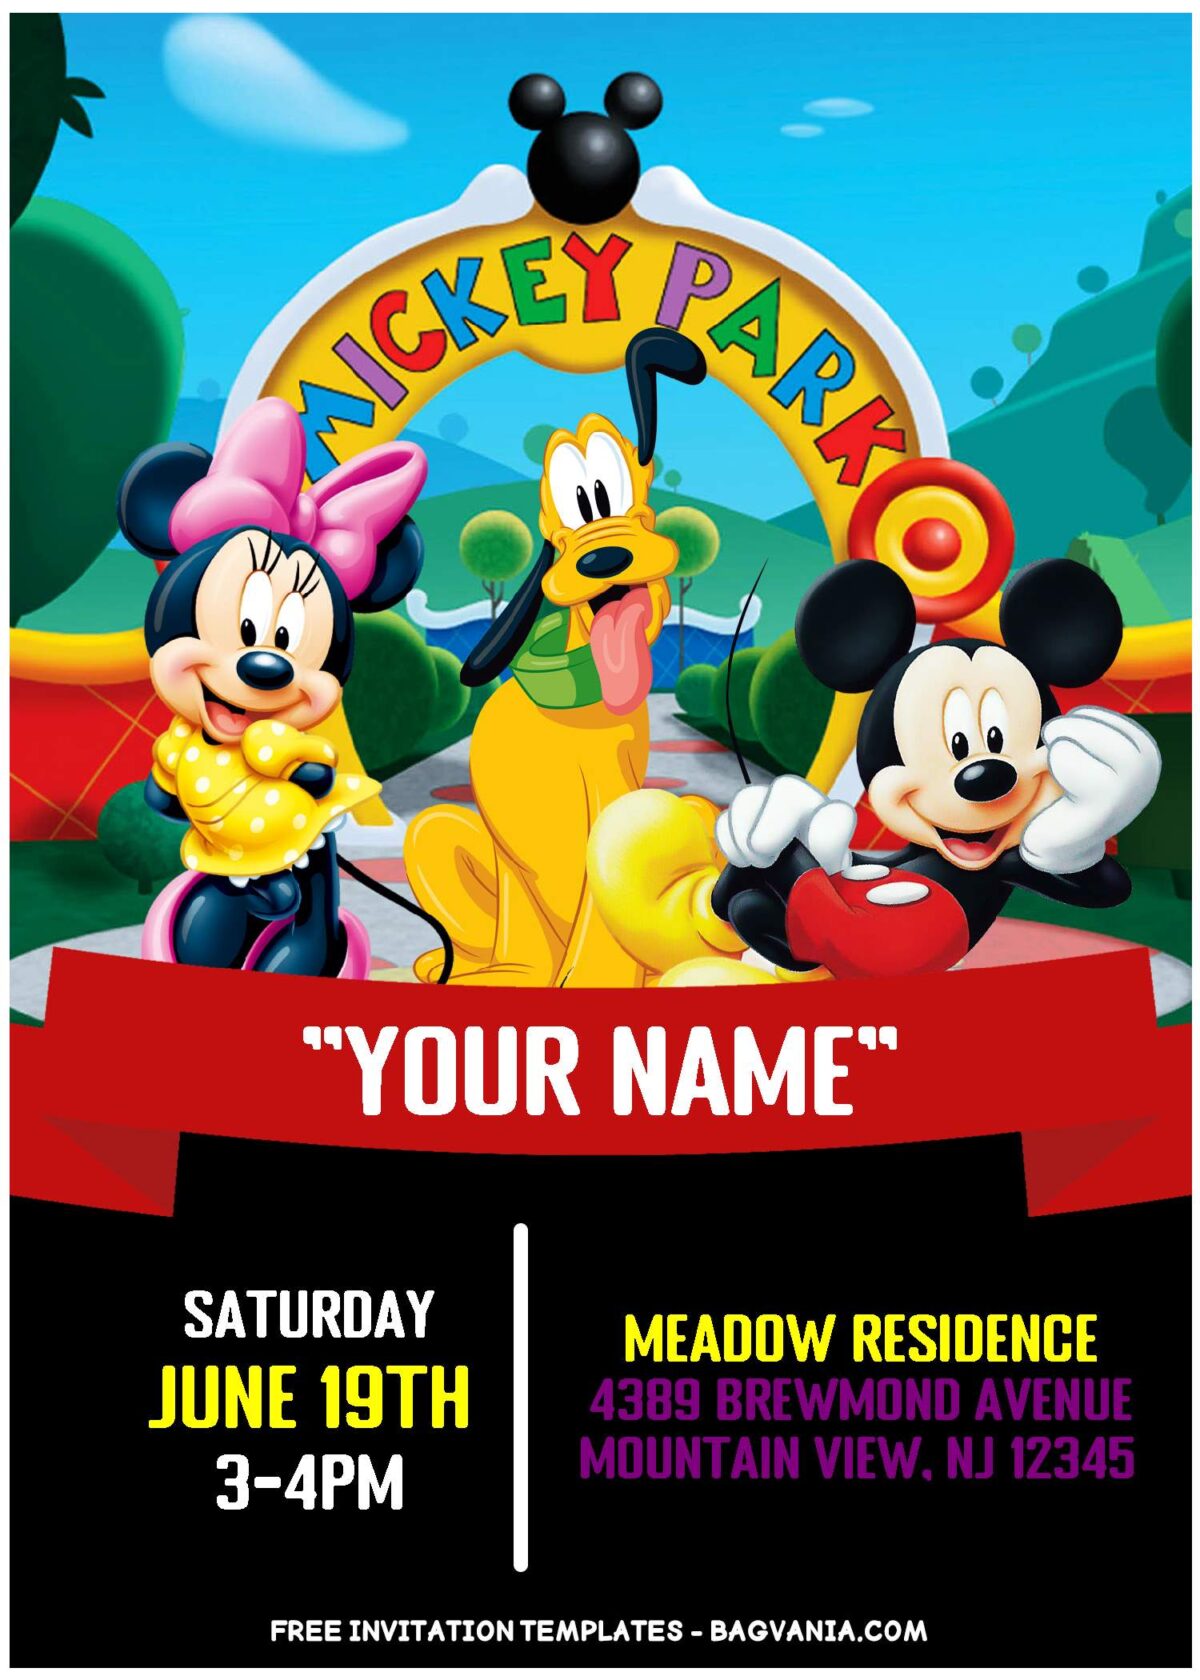 (Free Editable PDF) Adorable Mickey Park Birthday Invitation Templates with cute Mickey